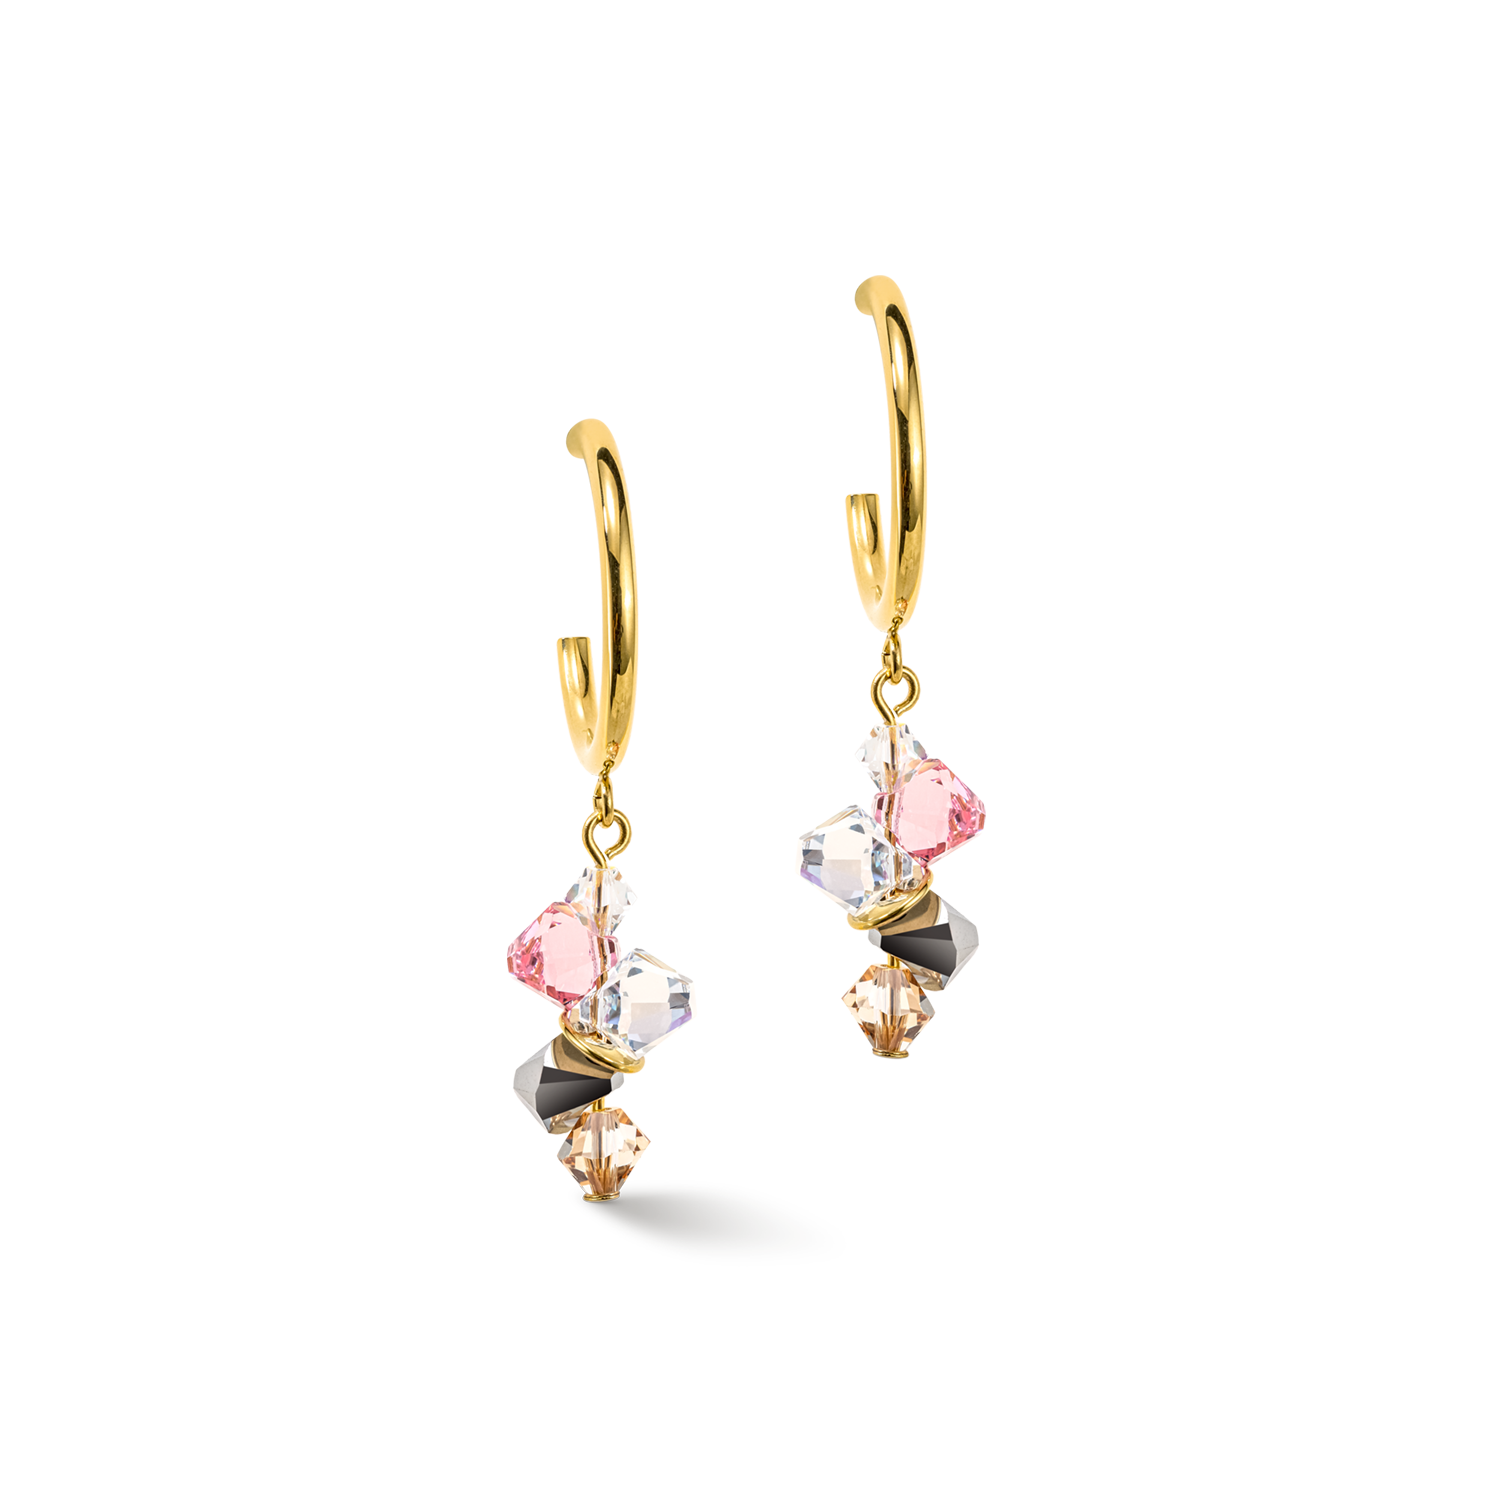 Dancing Crystals earrings gold light rose